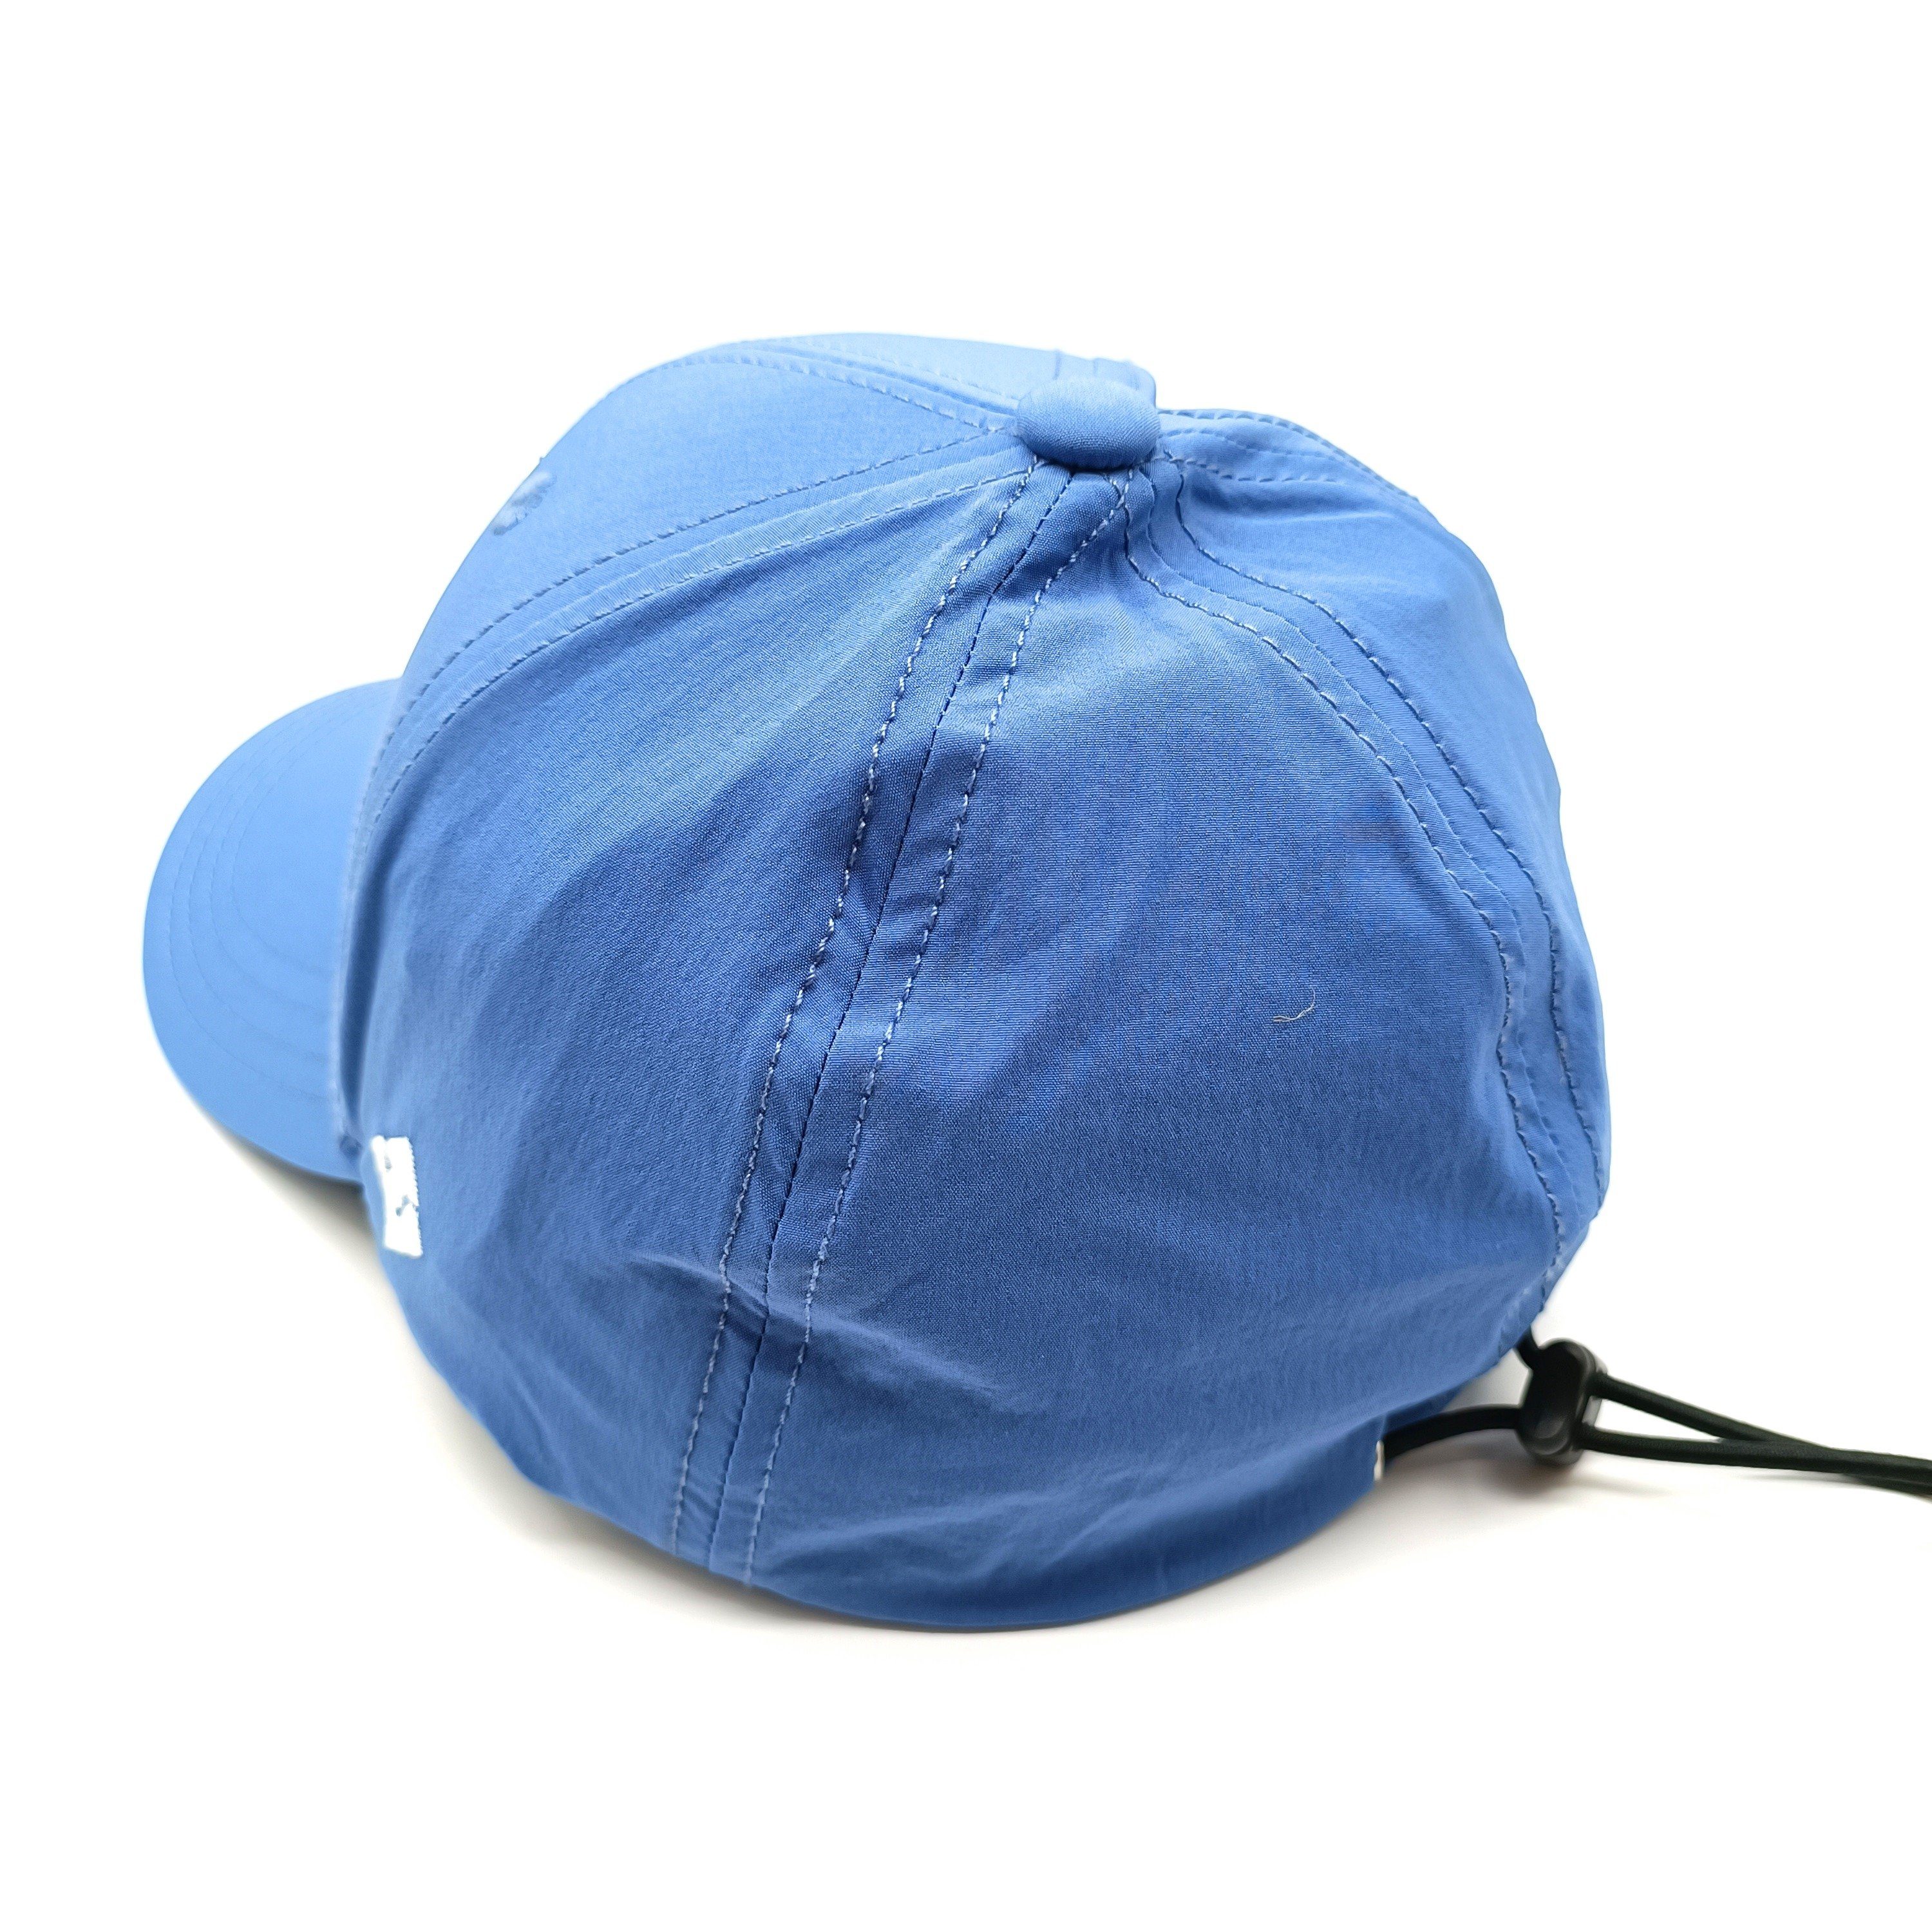 Edelweiß Baseball Nackenschutz Bavarian hellblau Caps Cap